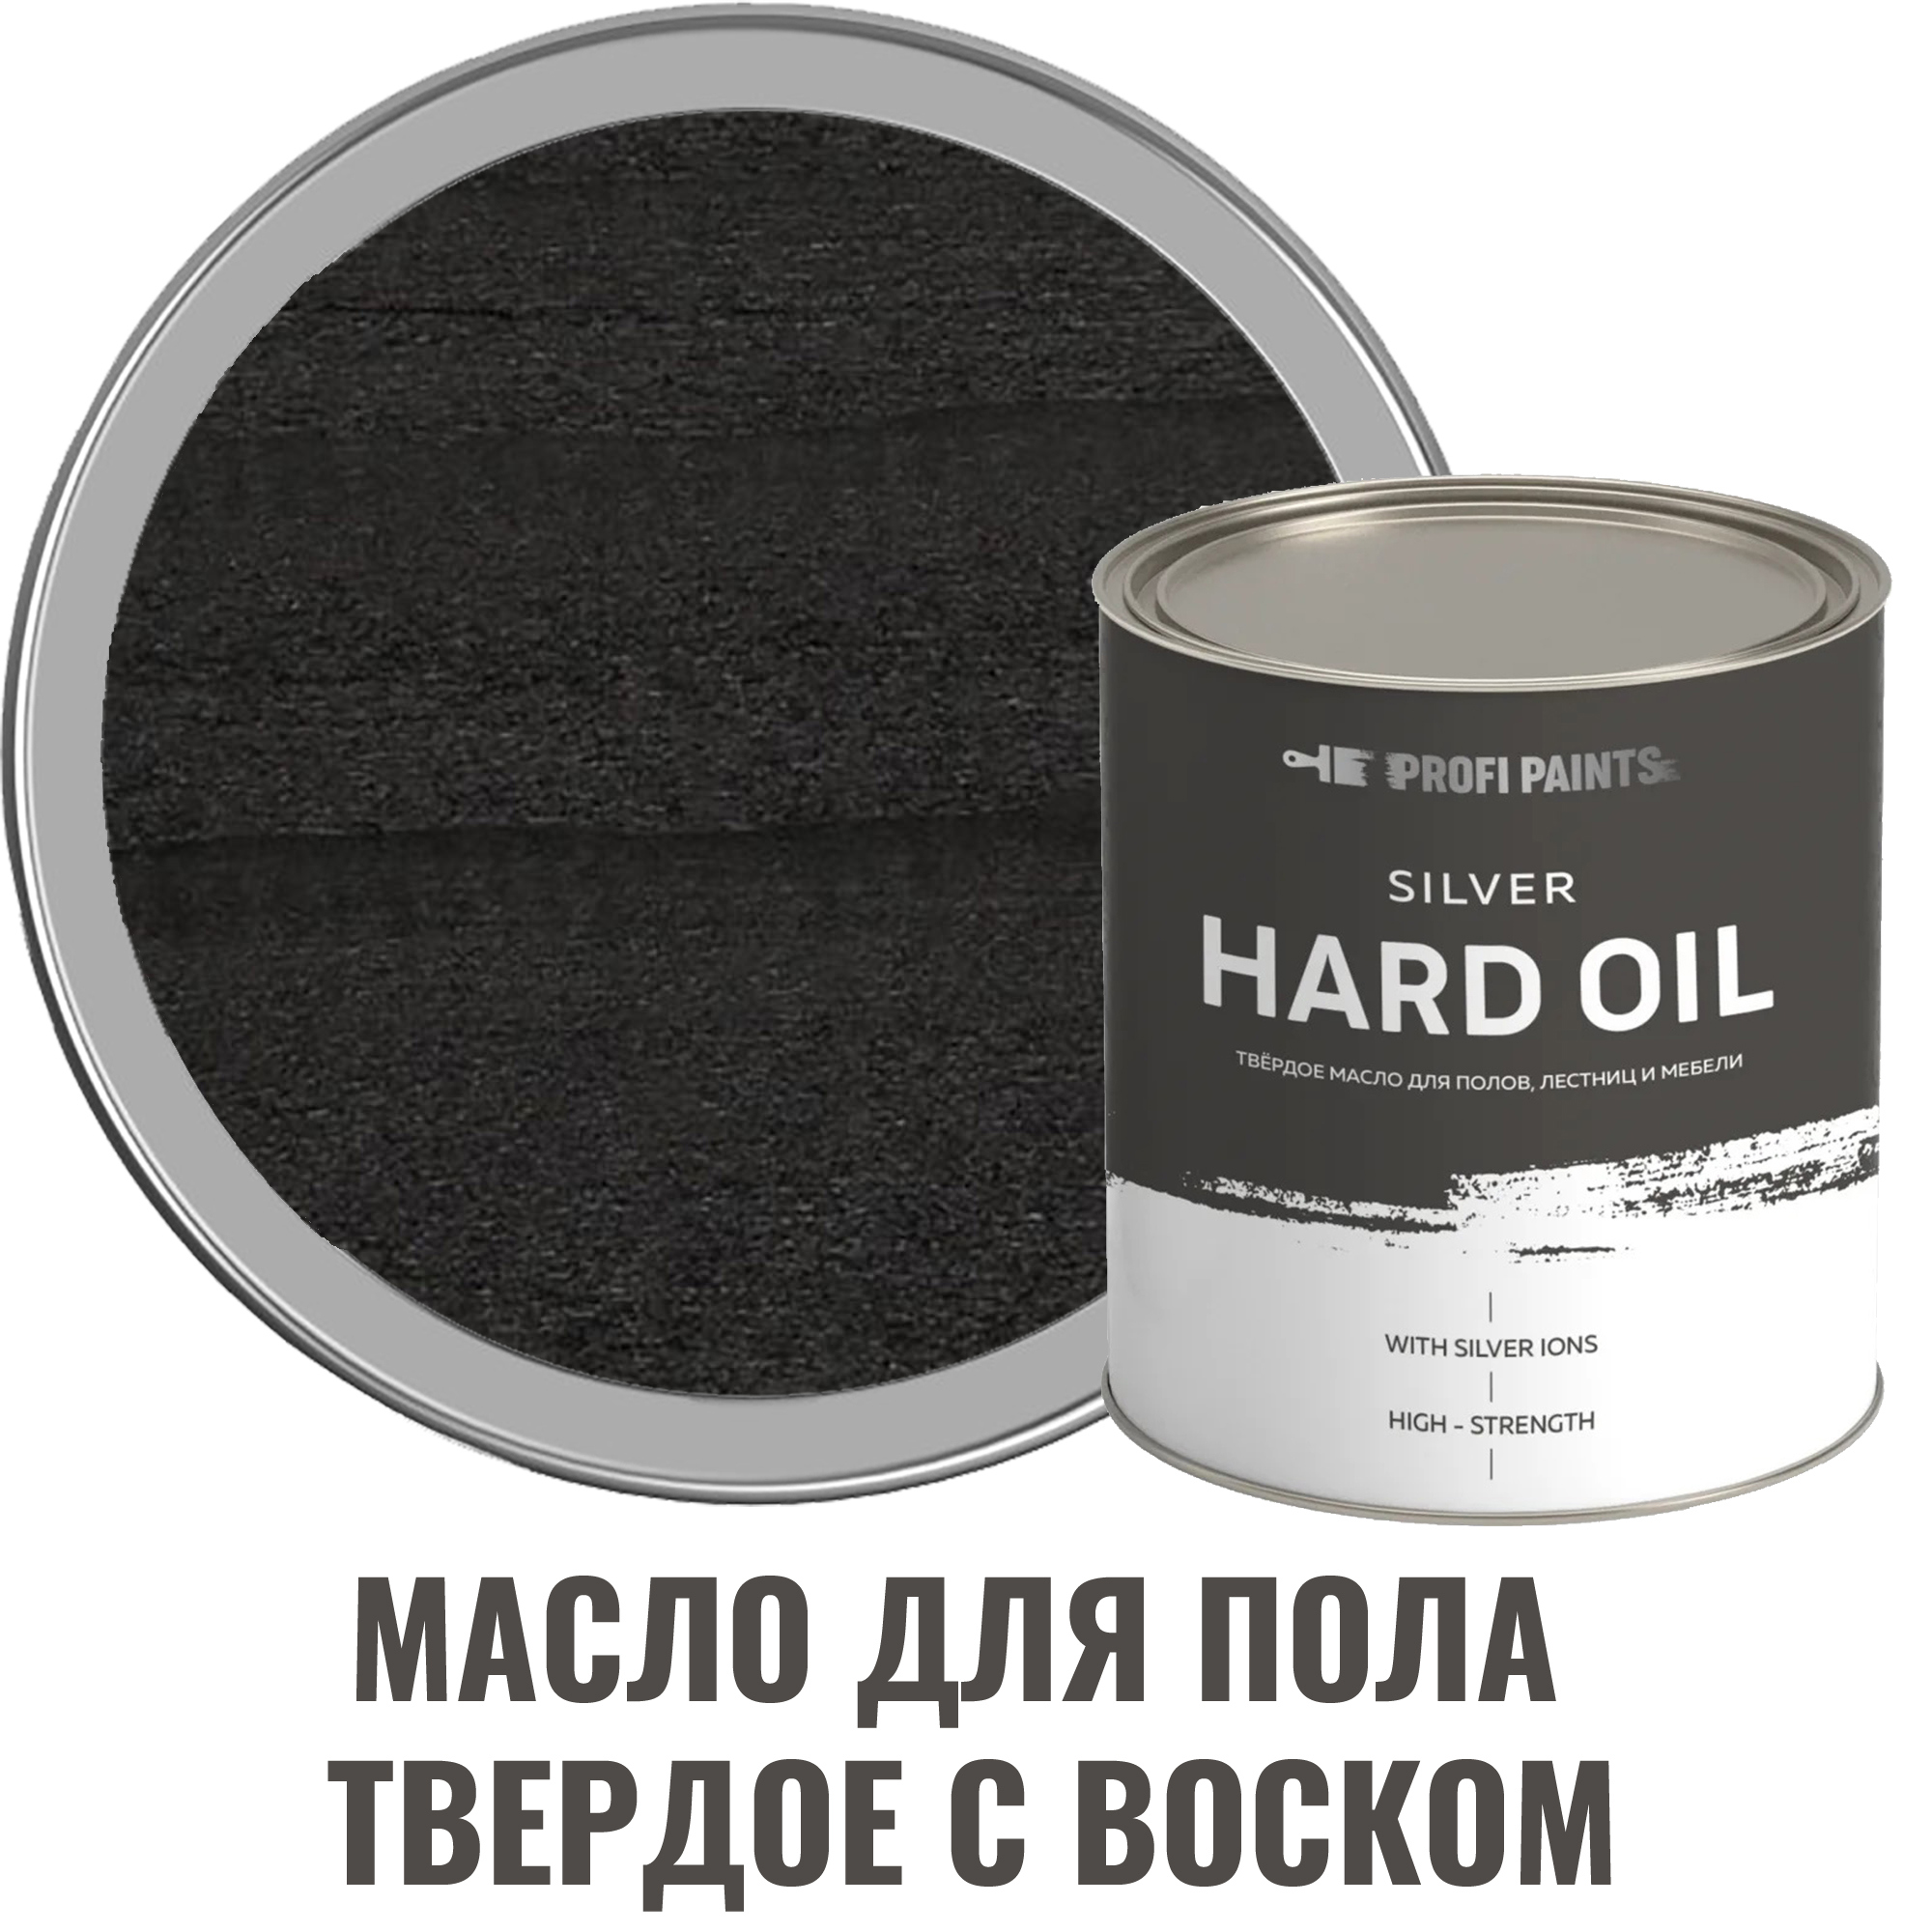 91095474 Масло для пола 10717_D Silver Hard Oil цвет черный 0.9 л STLM-0481832 PROFIPAINTS